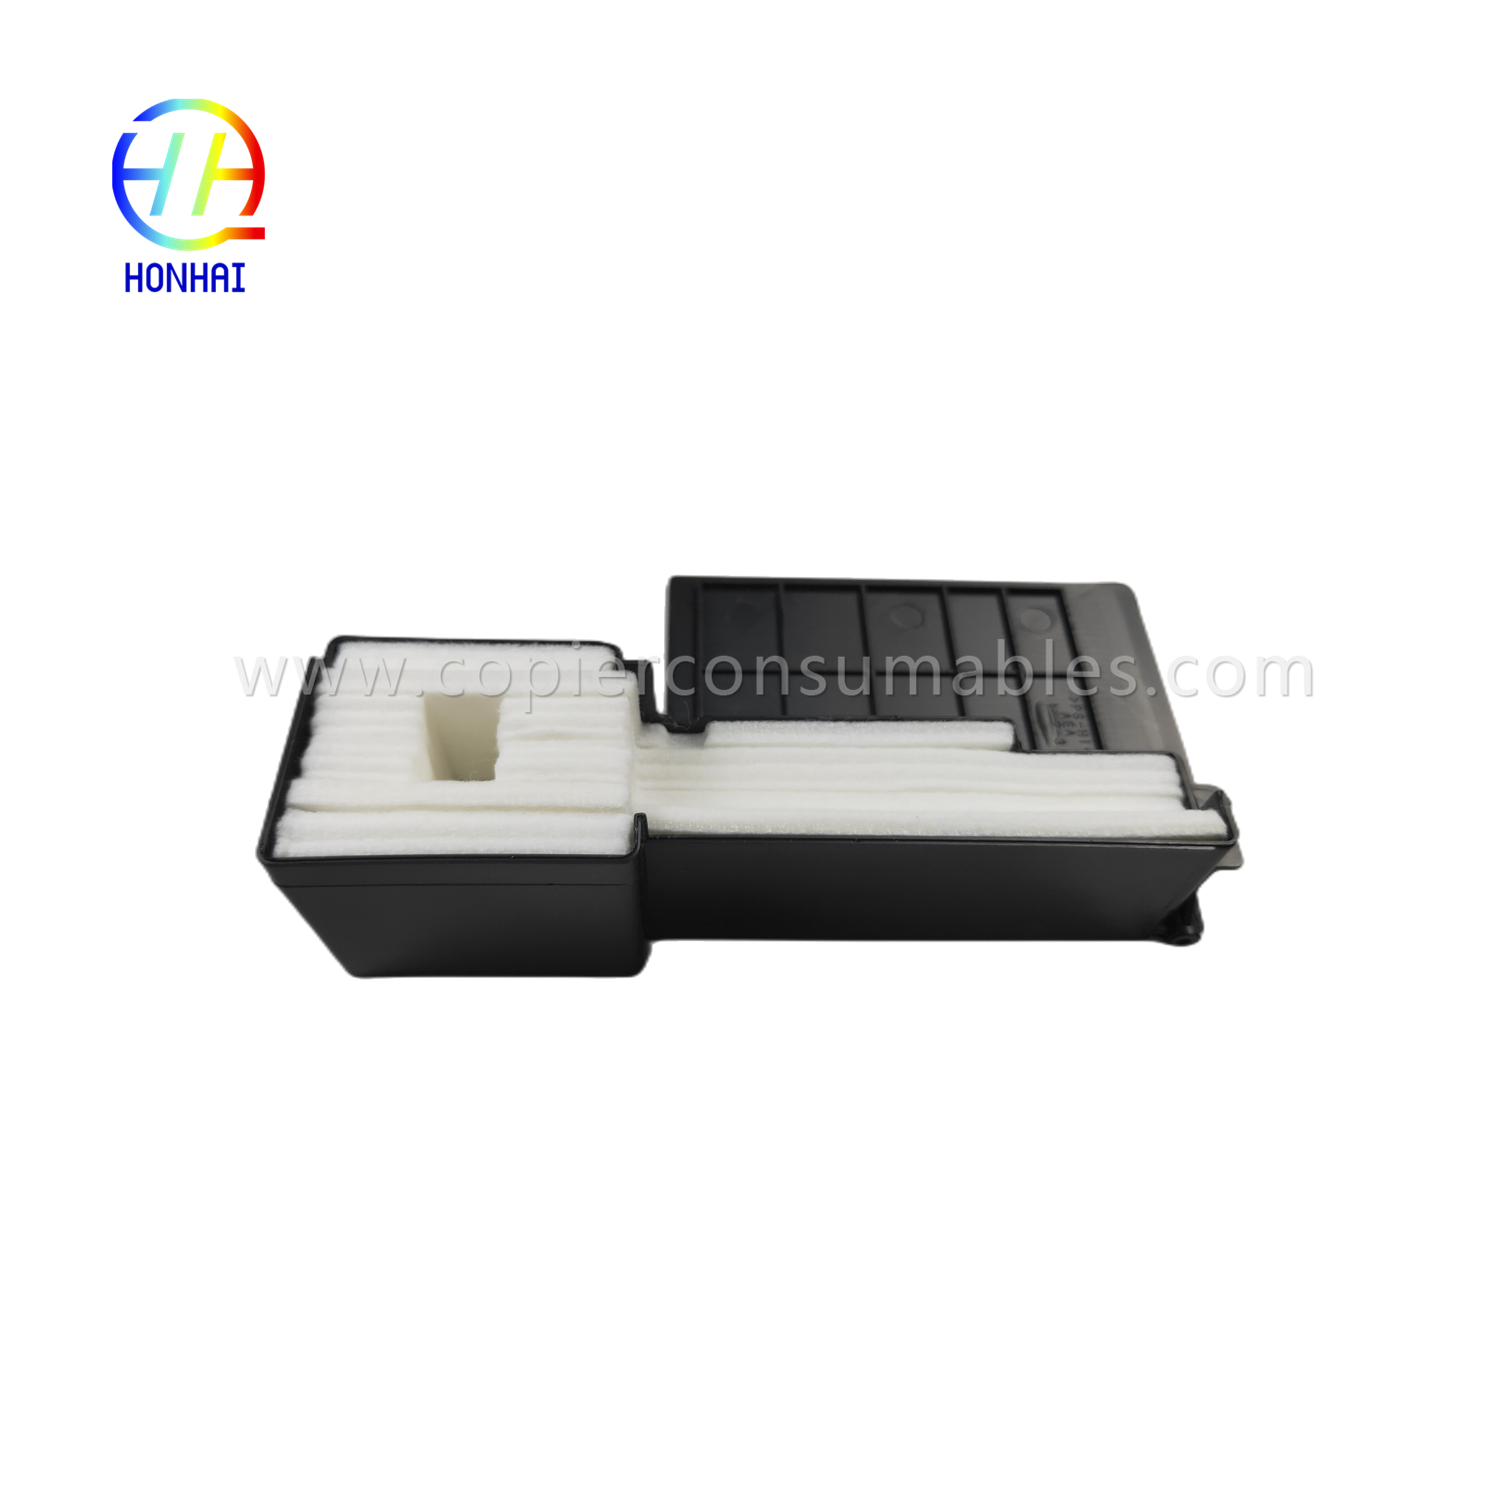 Afvalinktkussenpakket voor Epson L220 L360 L380 printer